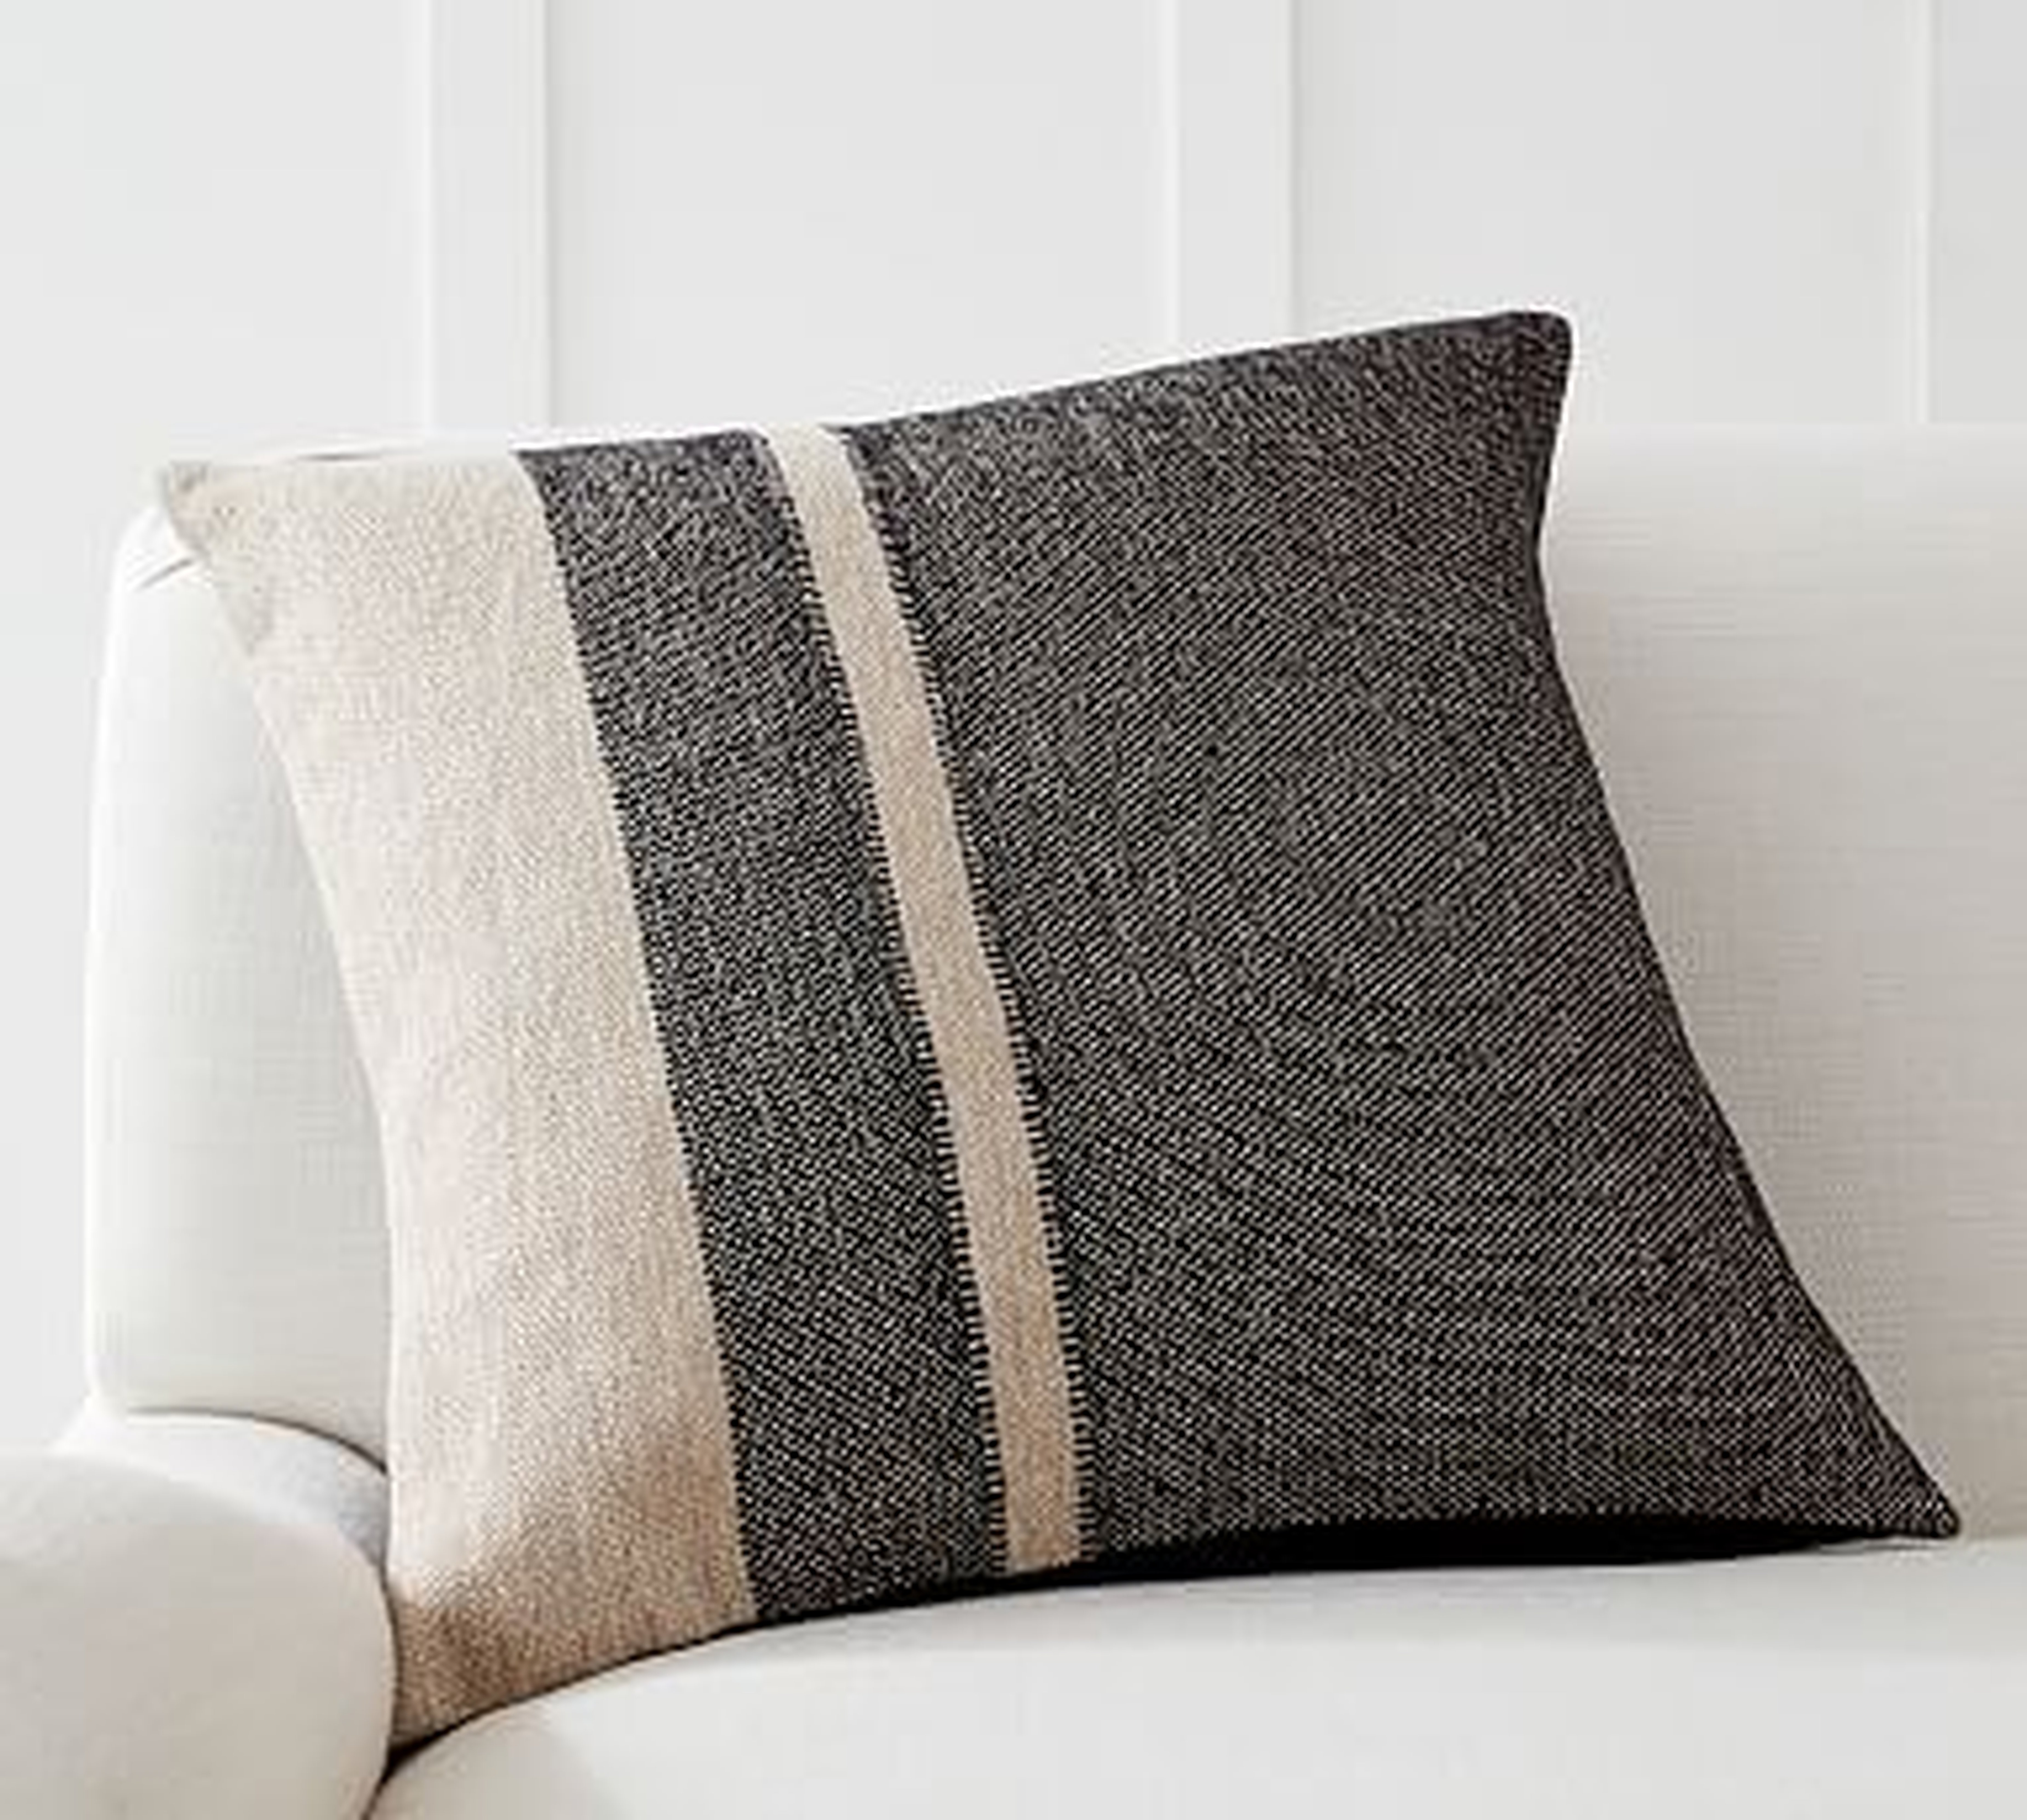 Kimana Striped Pillow Cover, 20 x 20", Charcoal Multi - Pottery Barn